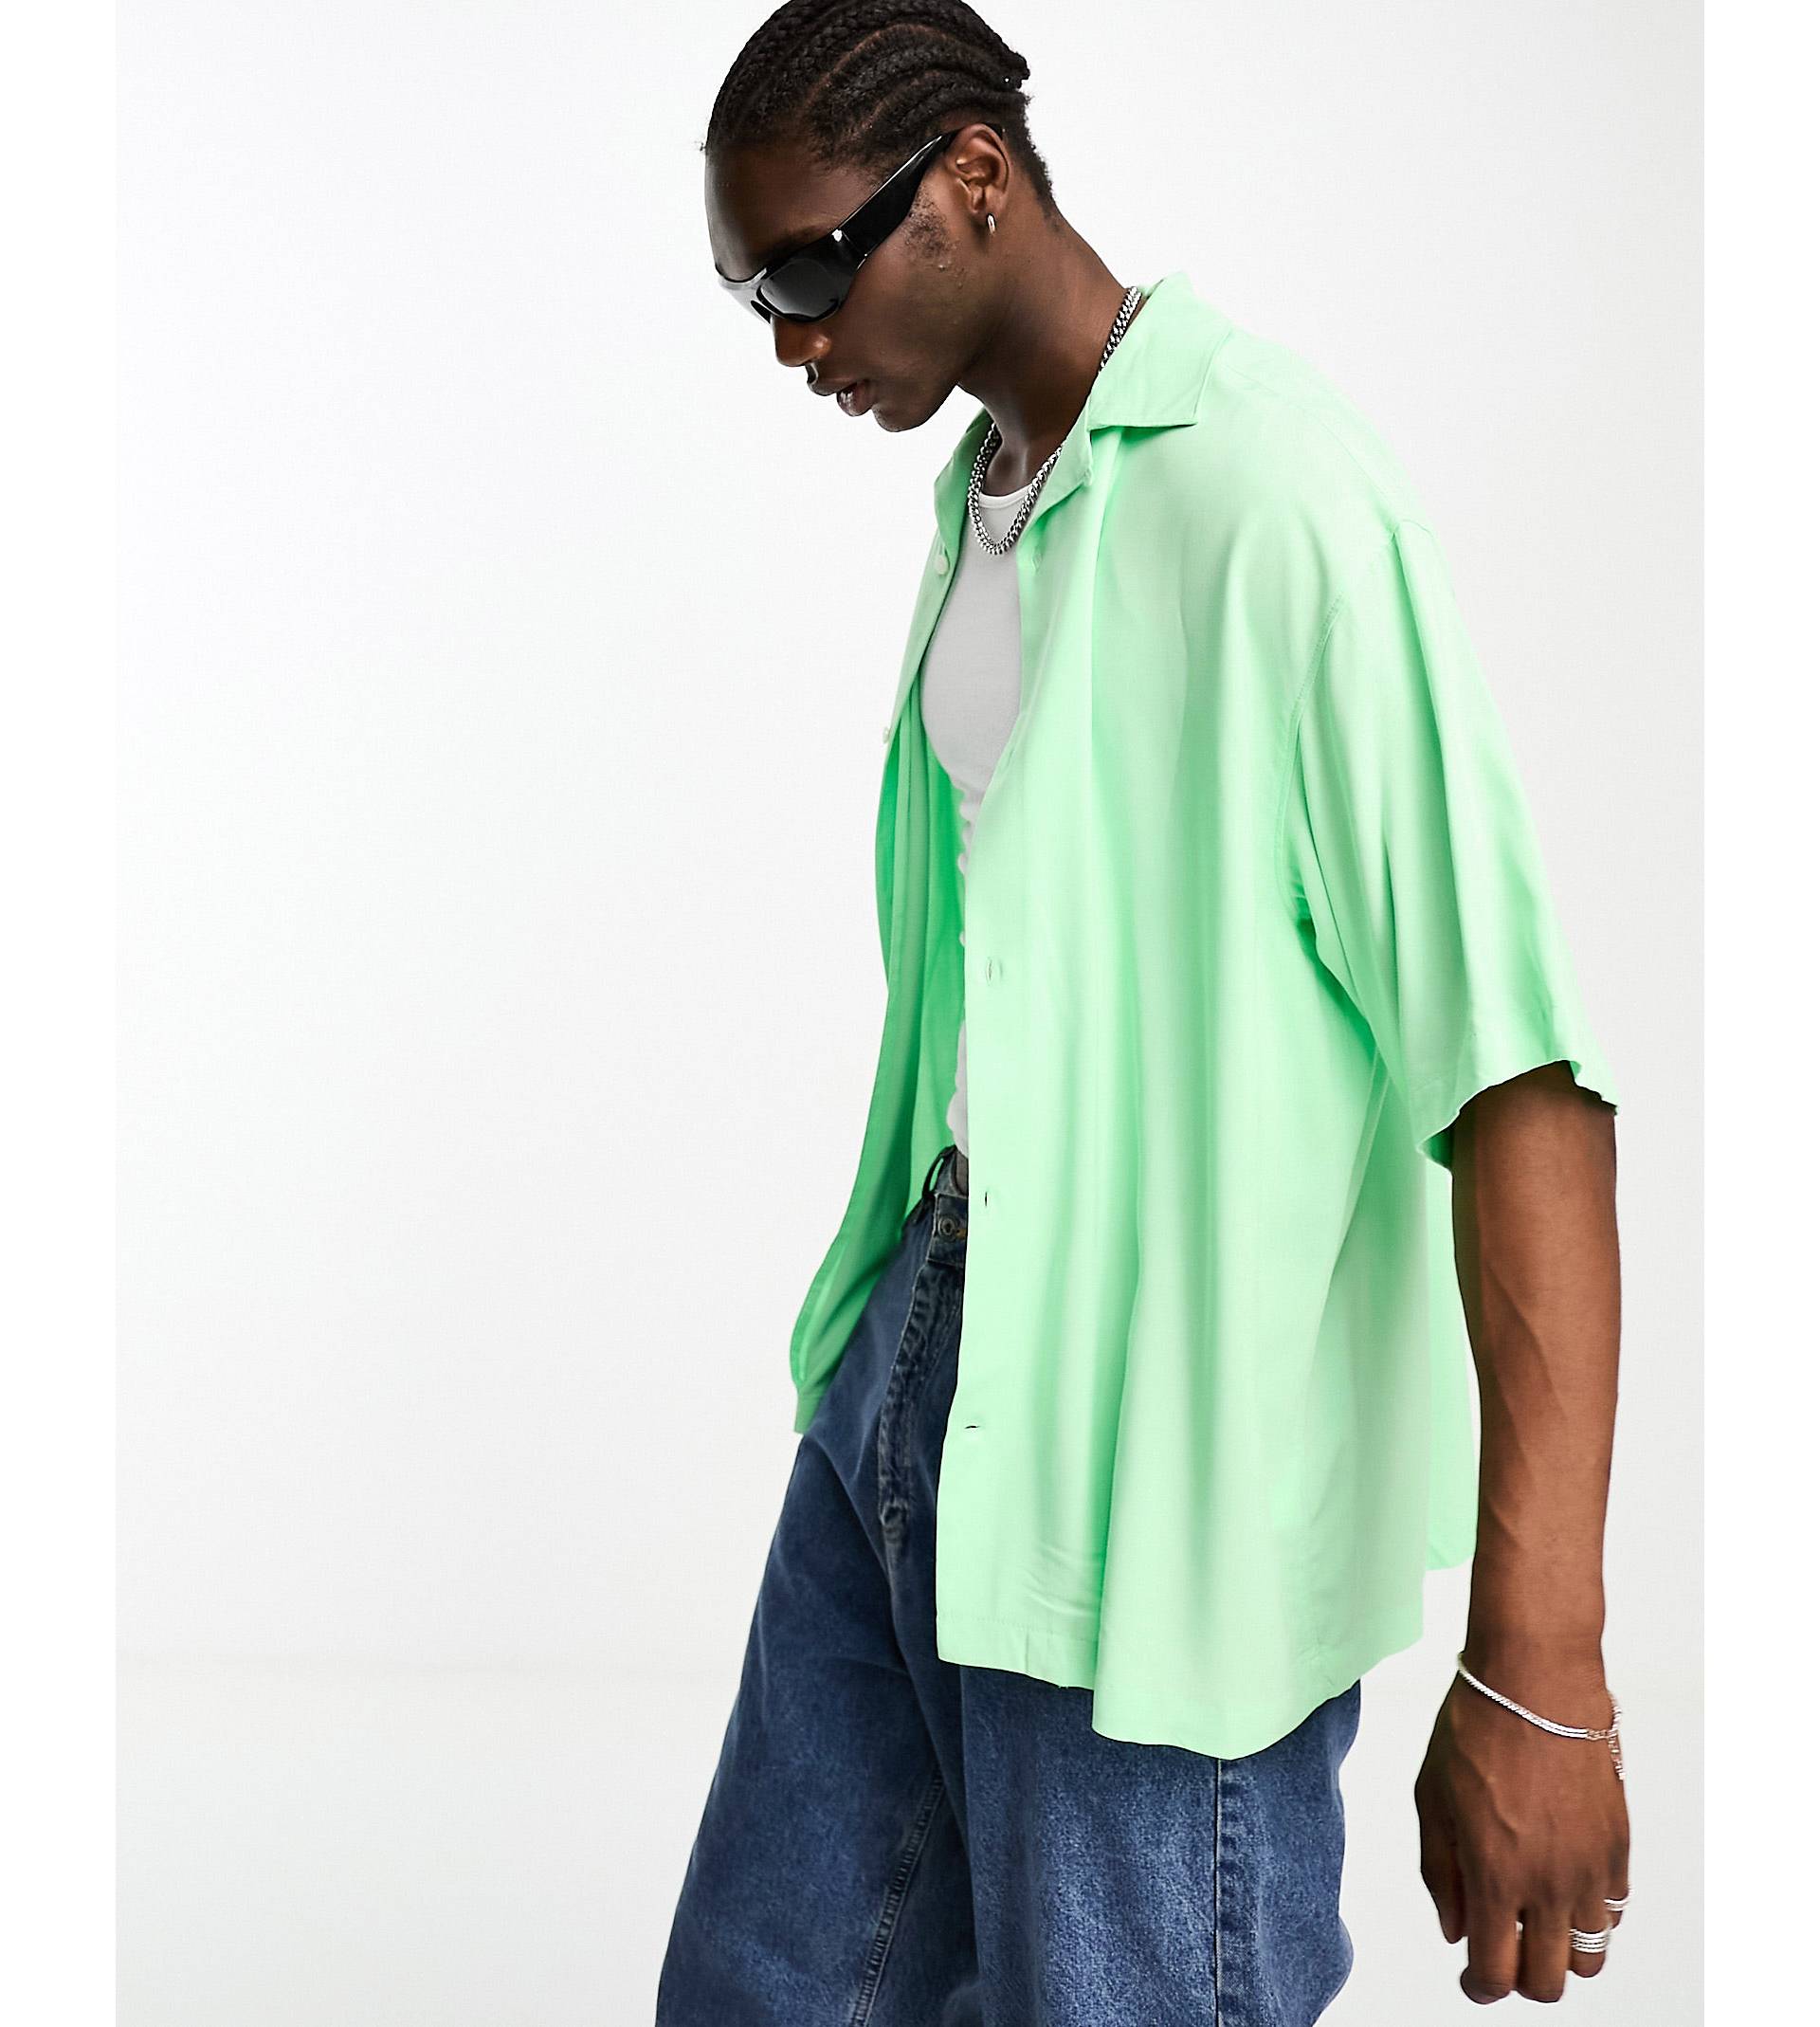 Светло-зеленая рубашка оверсайз с коротким рукавом Weekday Coffee футболка оверсайз с коротким рукавом светло зеленая button blue